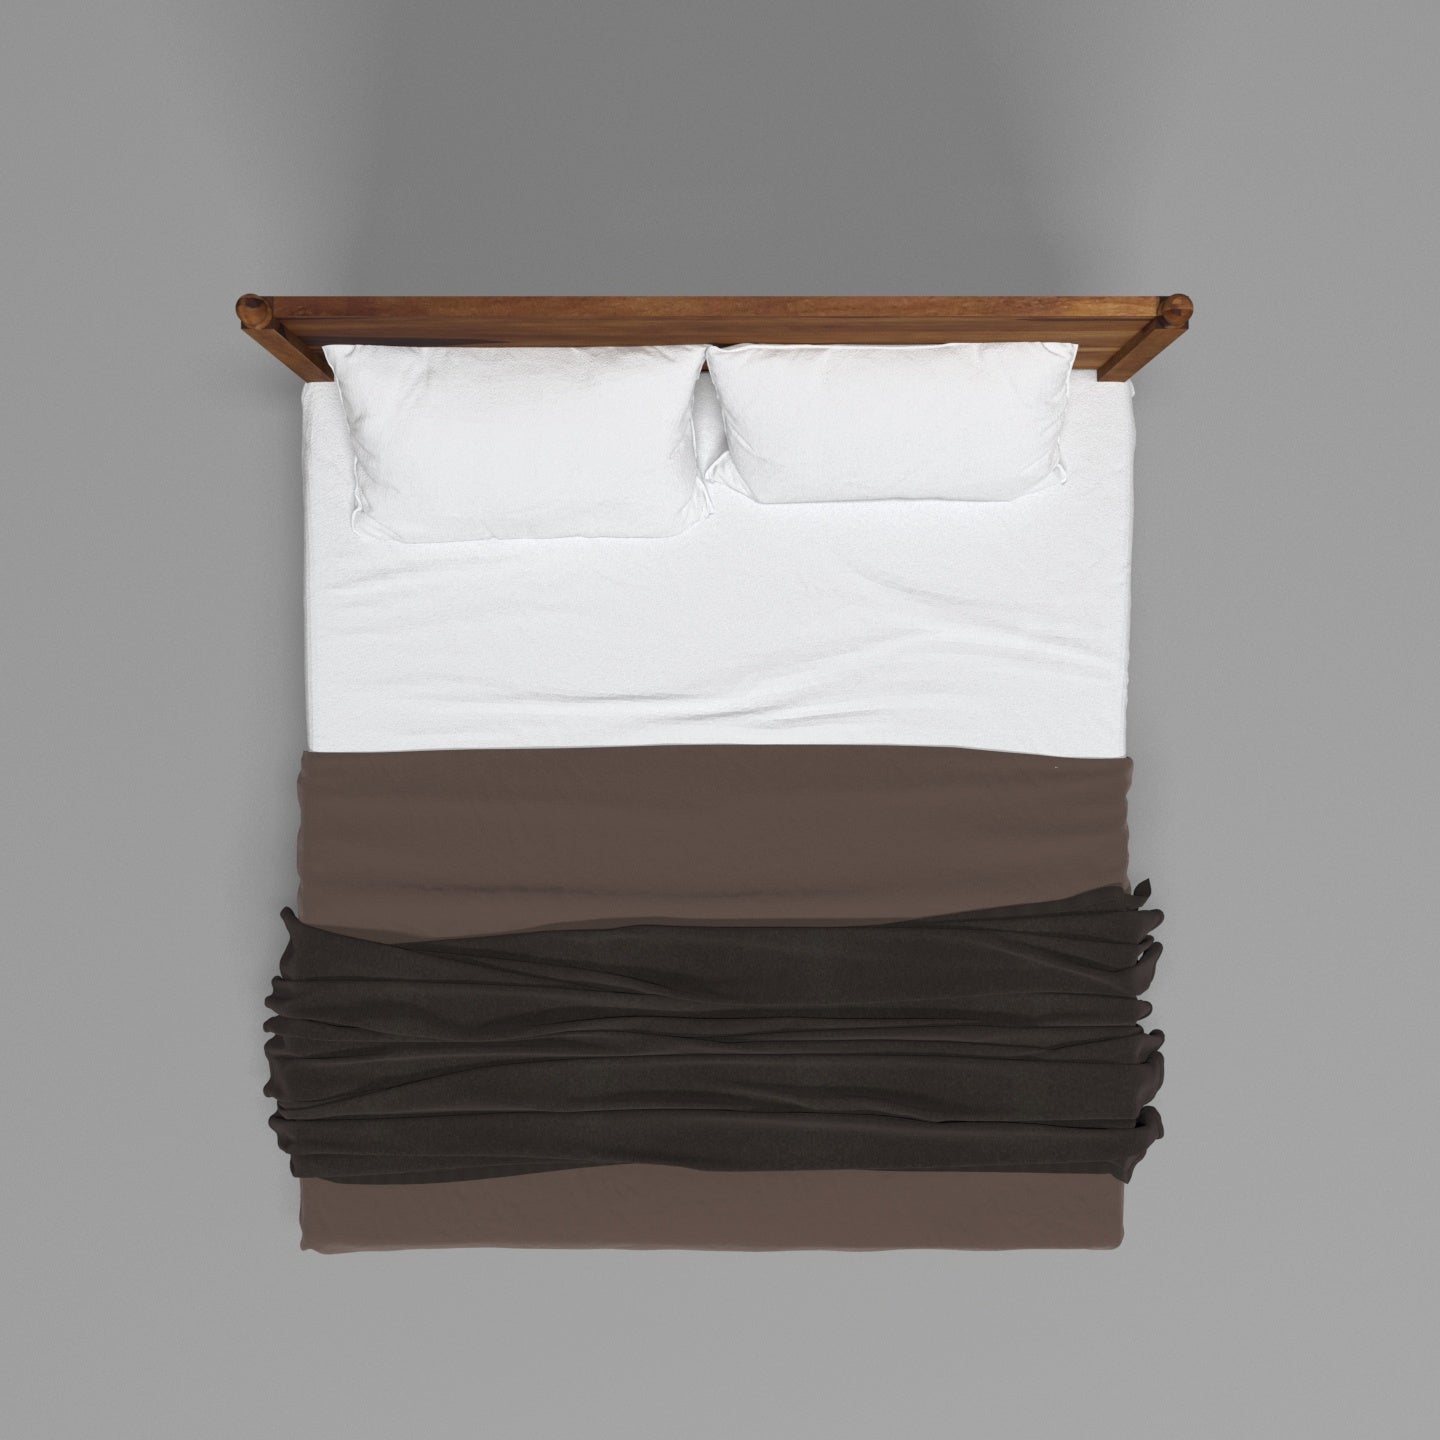 Natural tone sheesham wood classical Bed Bed